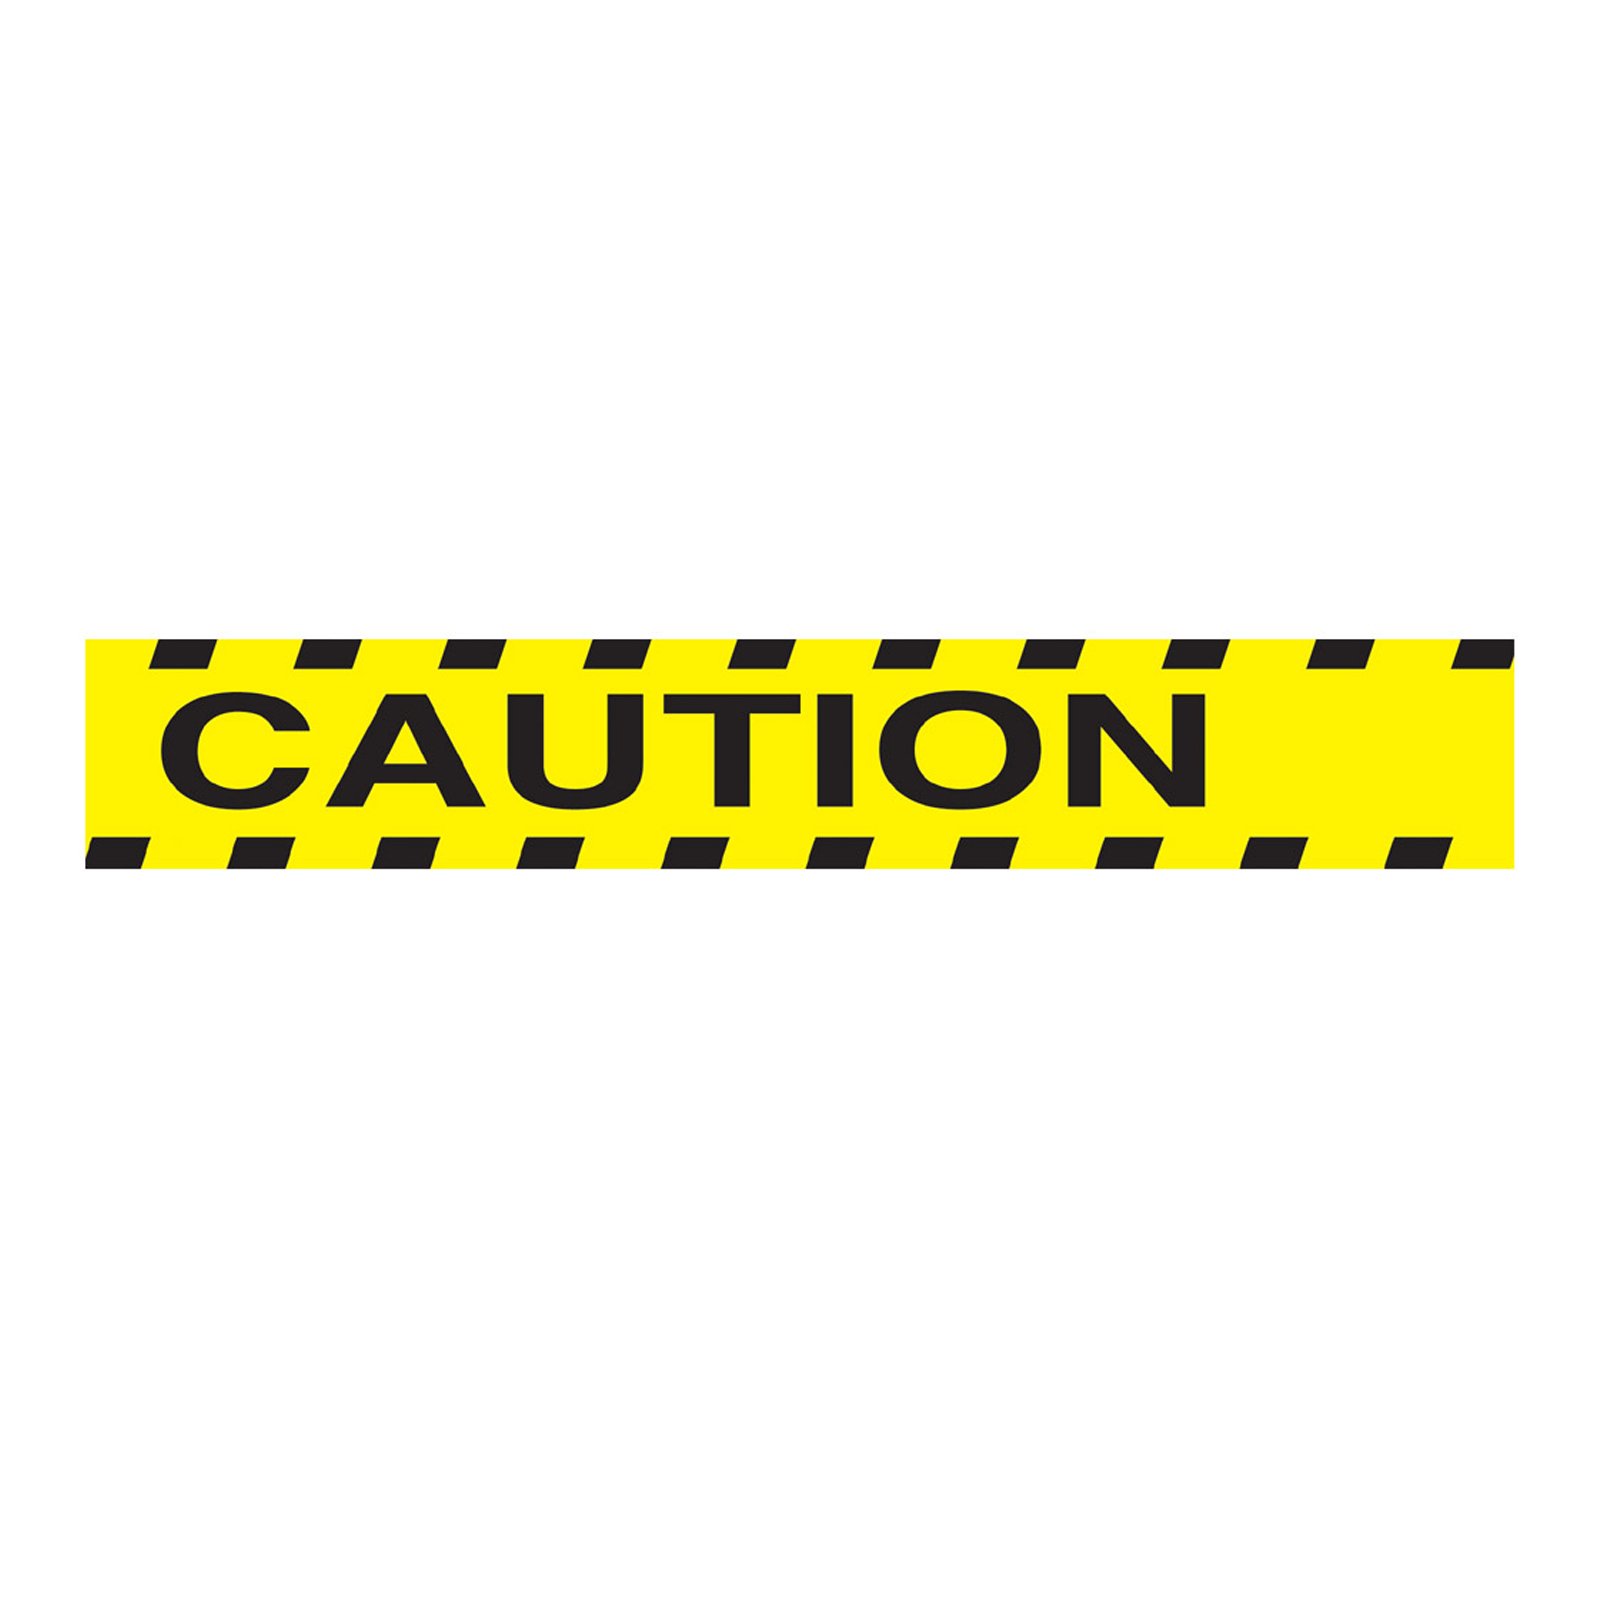 clipart warning caution - photo #32